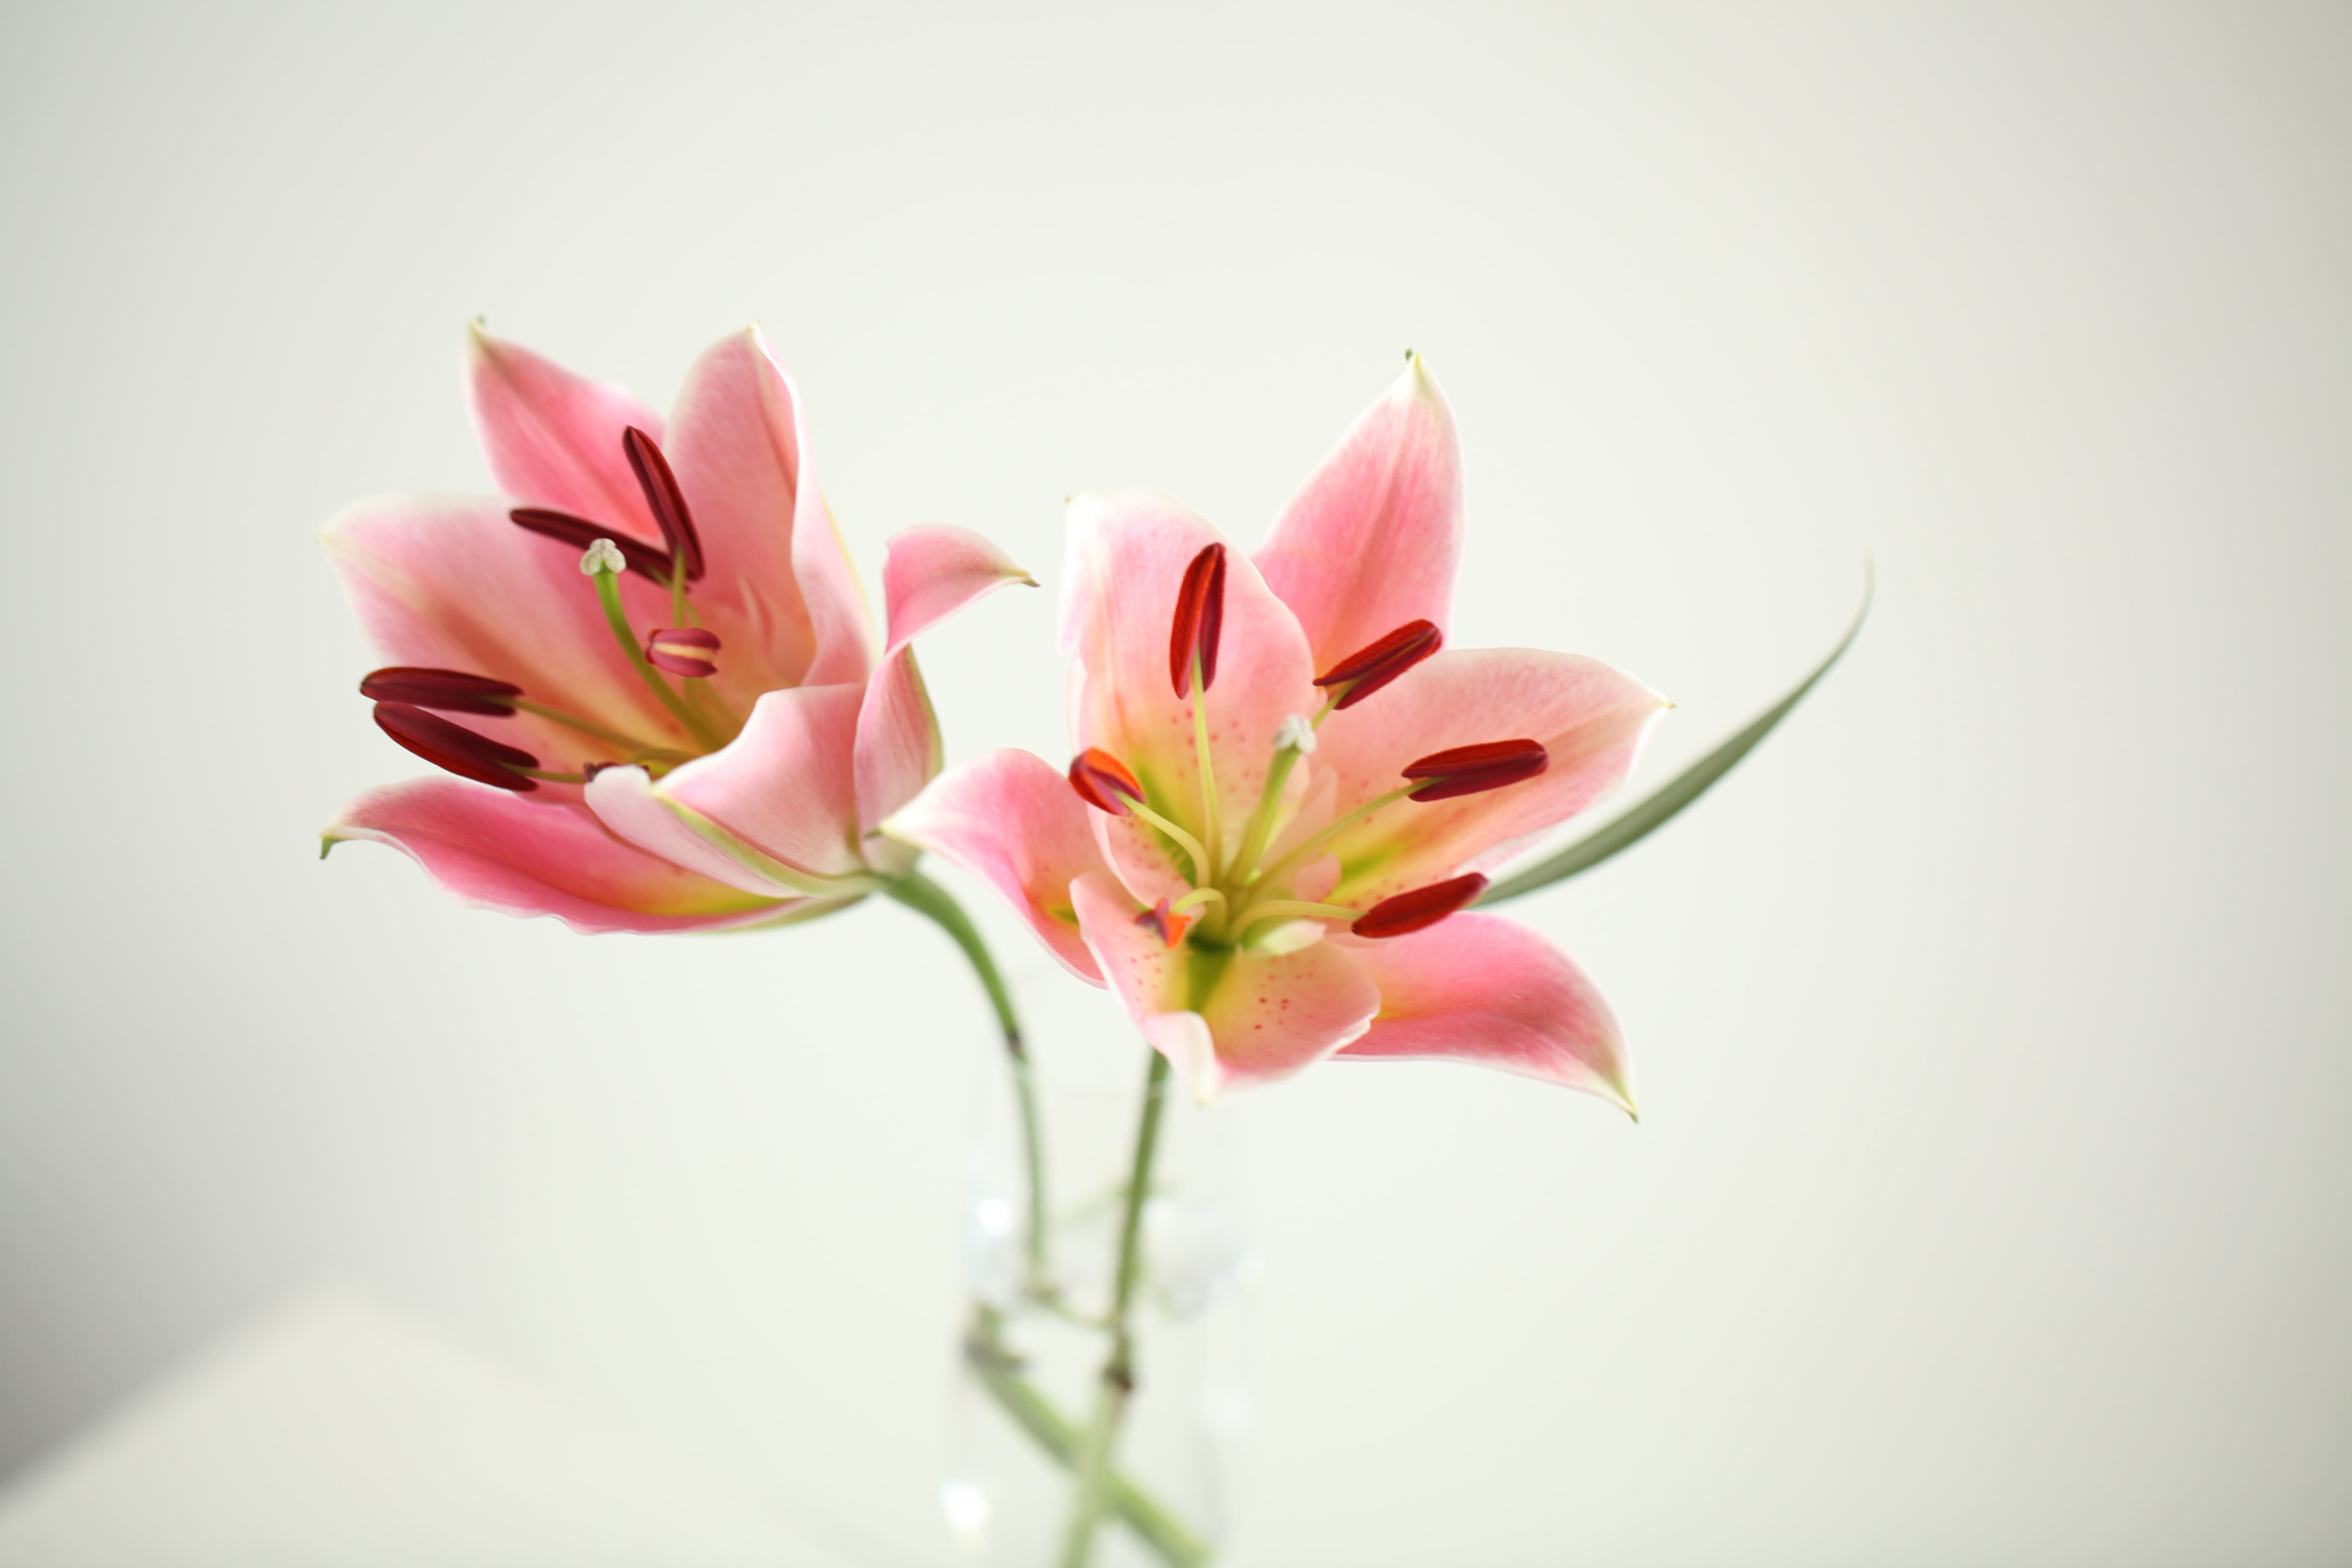 Lily flower deilvery